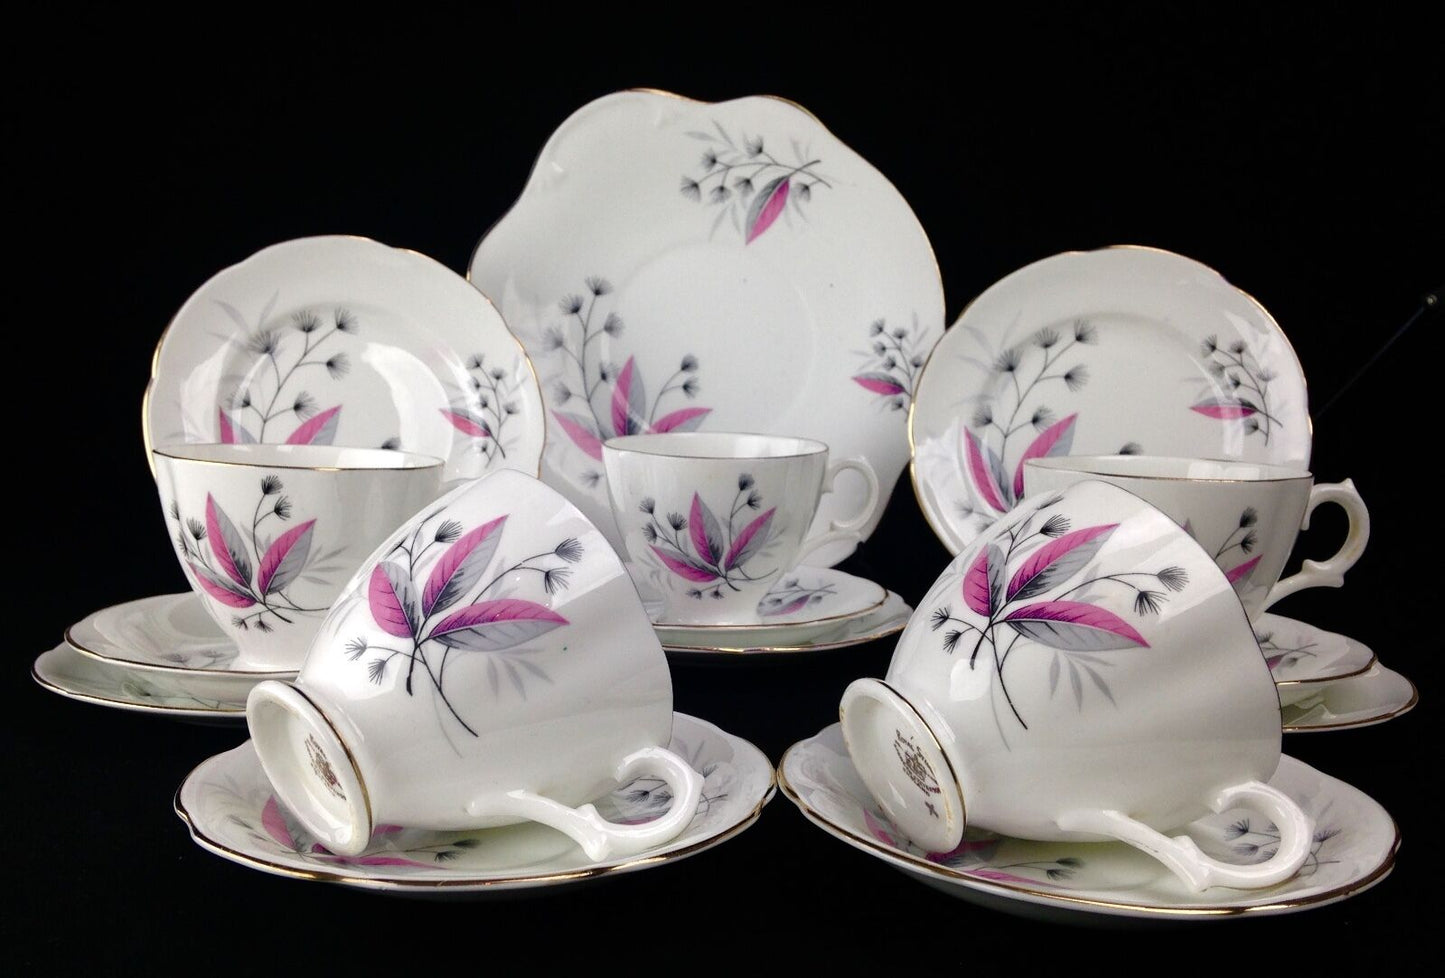 Royal Stuart Vintage Tea Set / Afternoon Tea / Pink And White Floral / Tea Cups